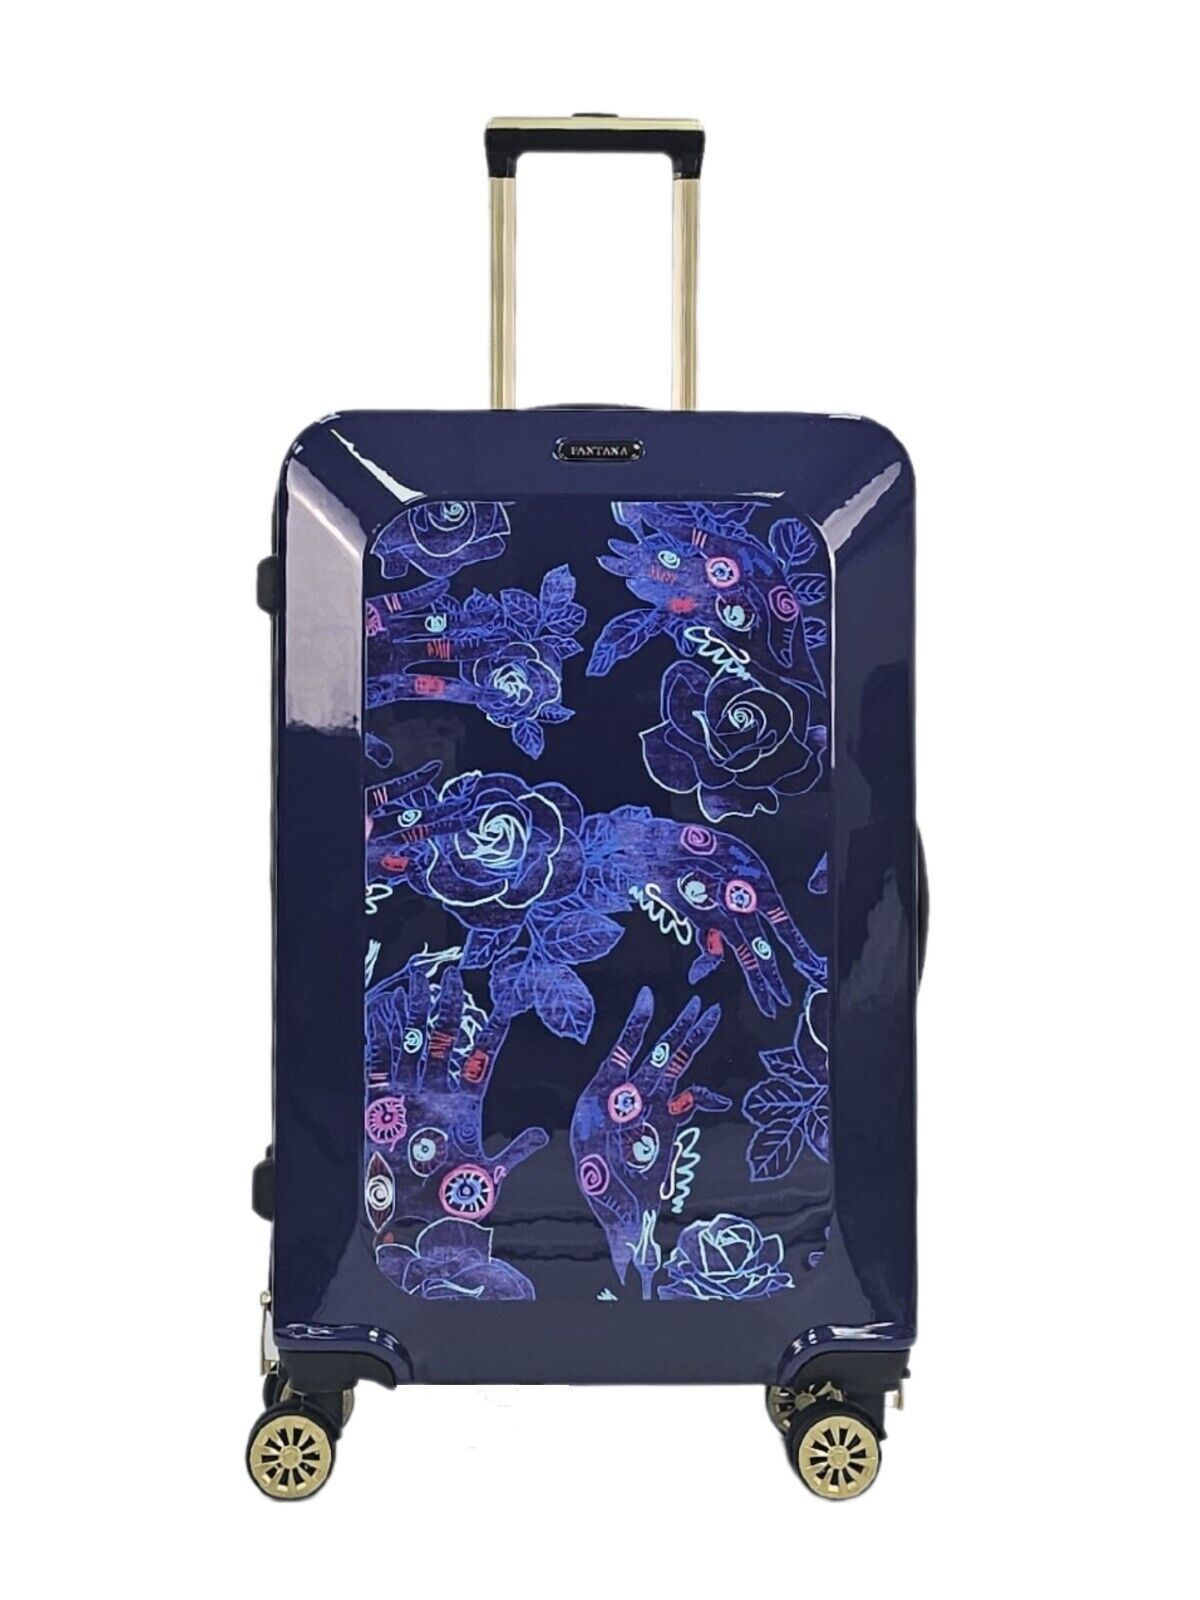 Butler Medium Hard Shell Suitcase in Blue